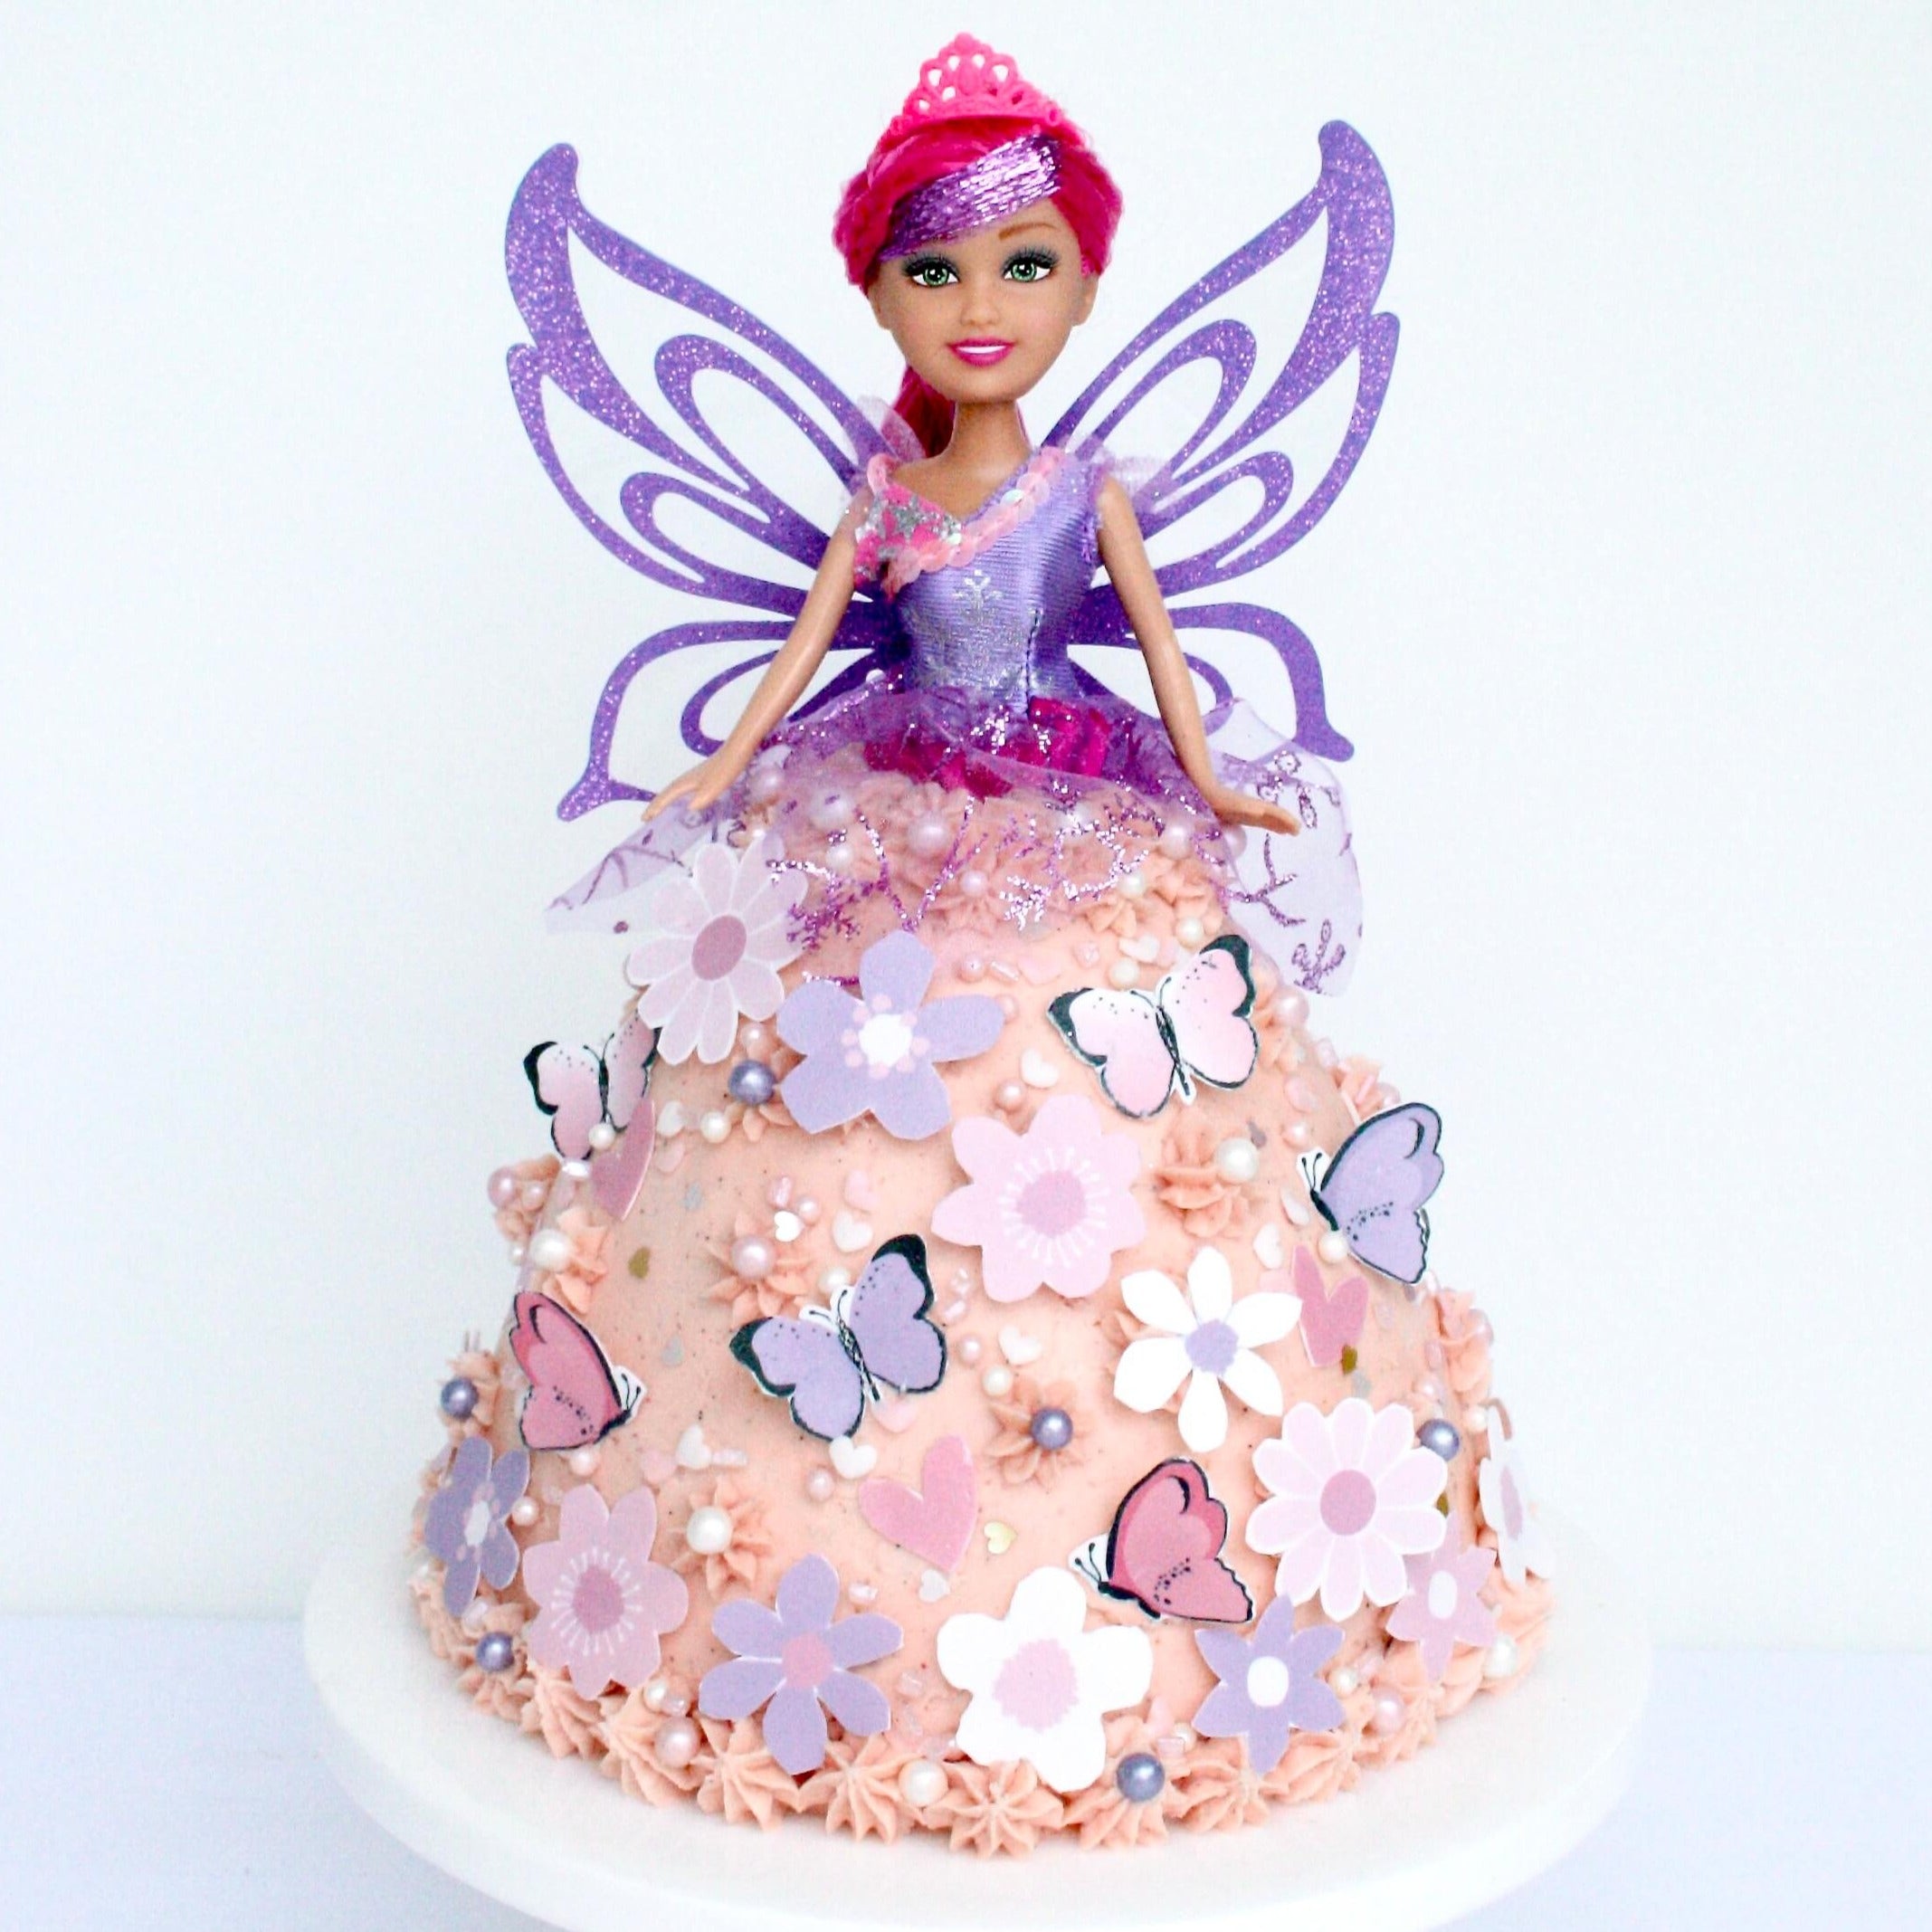 How to make Fairy Barbie Cake Recipe